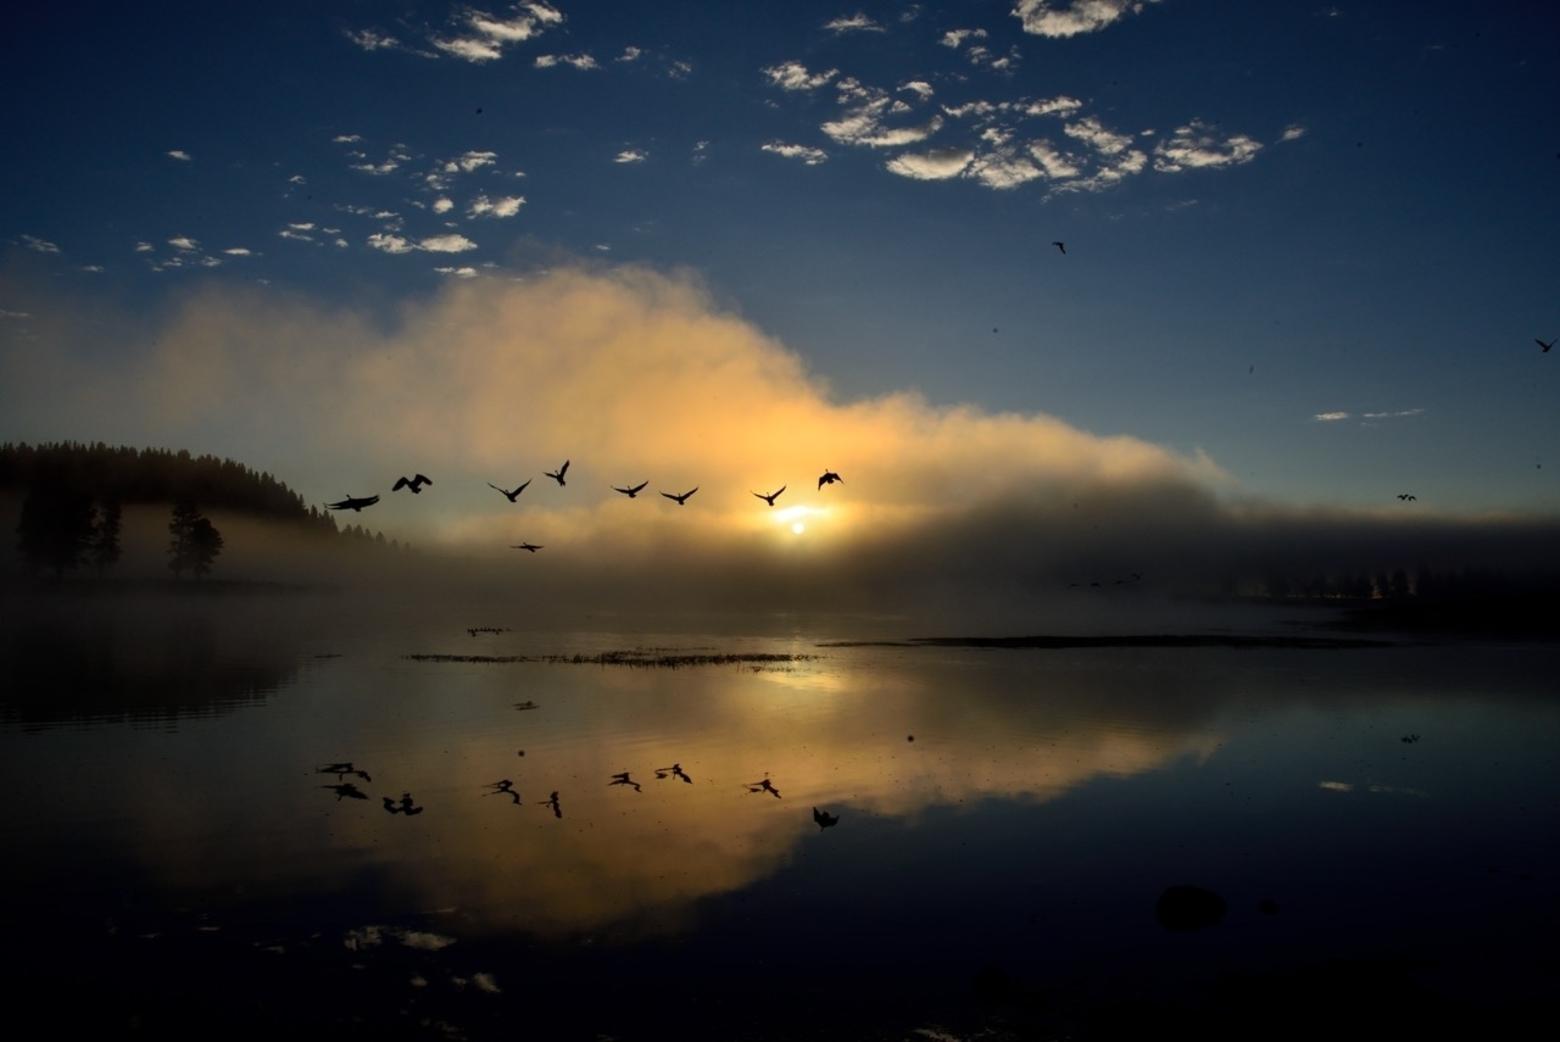 Symmetry at dawn: Fuller savors sunrises along the Yellowstone River